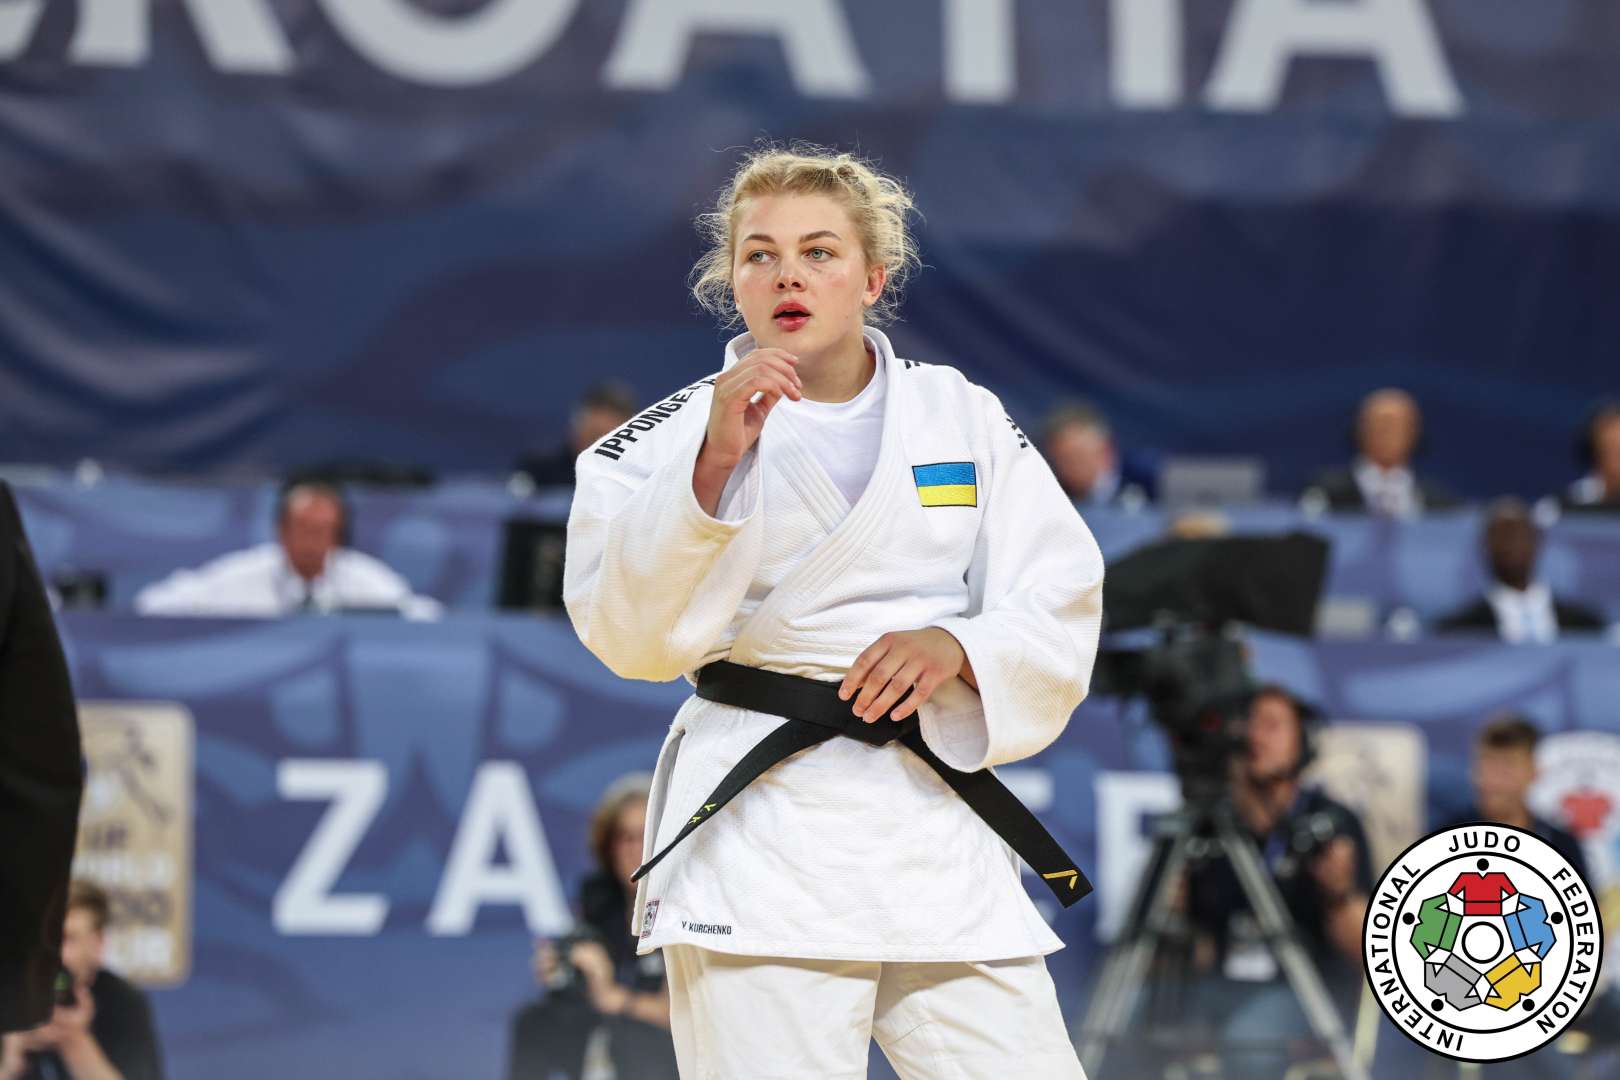 Yuliia Kurchenko